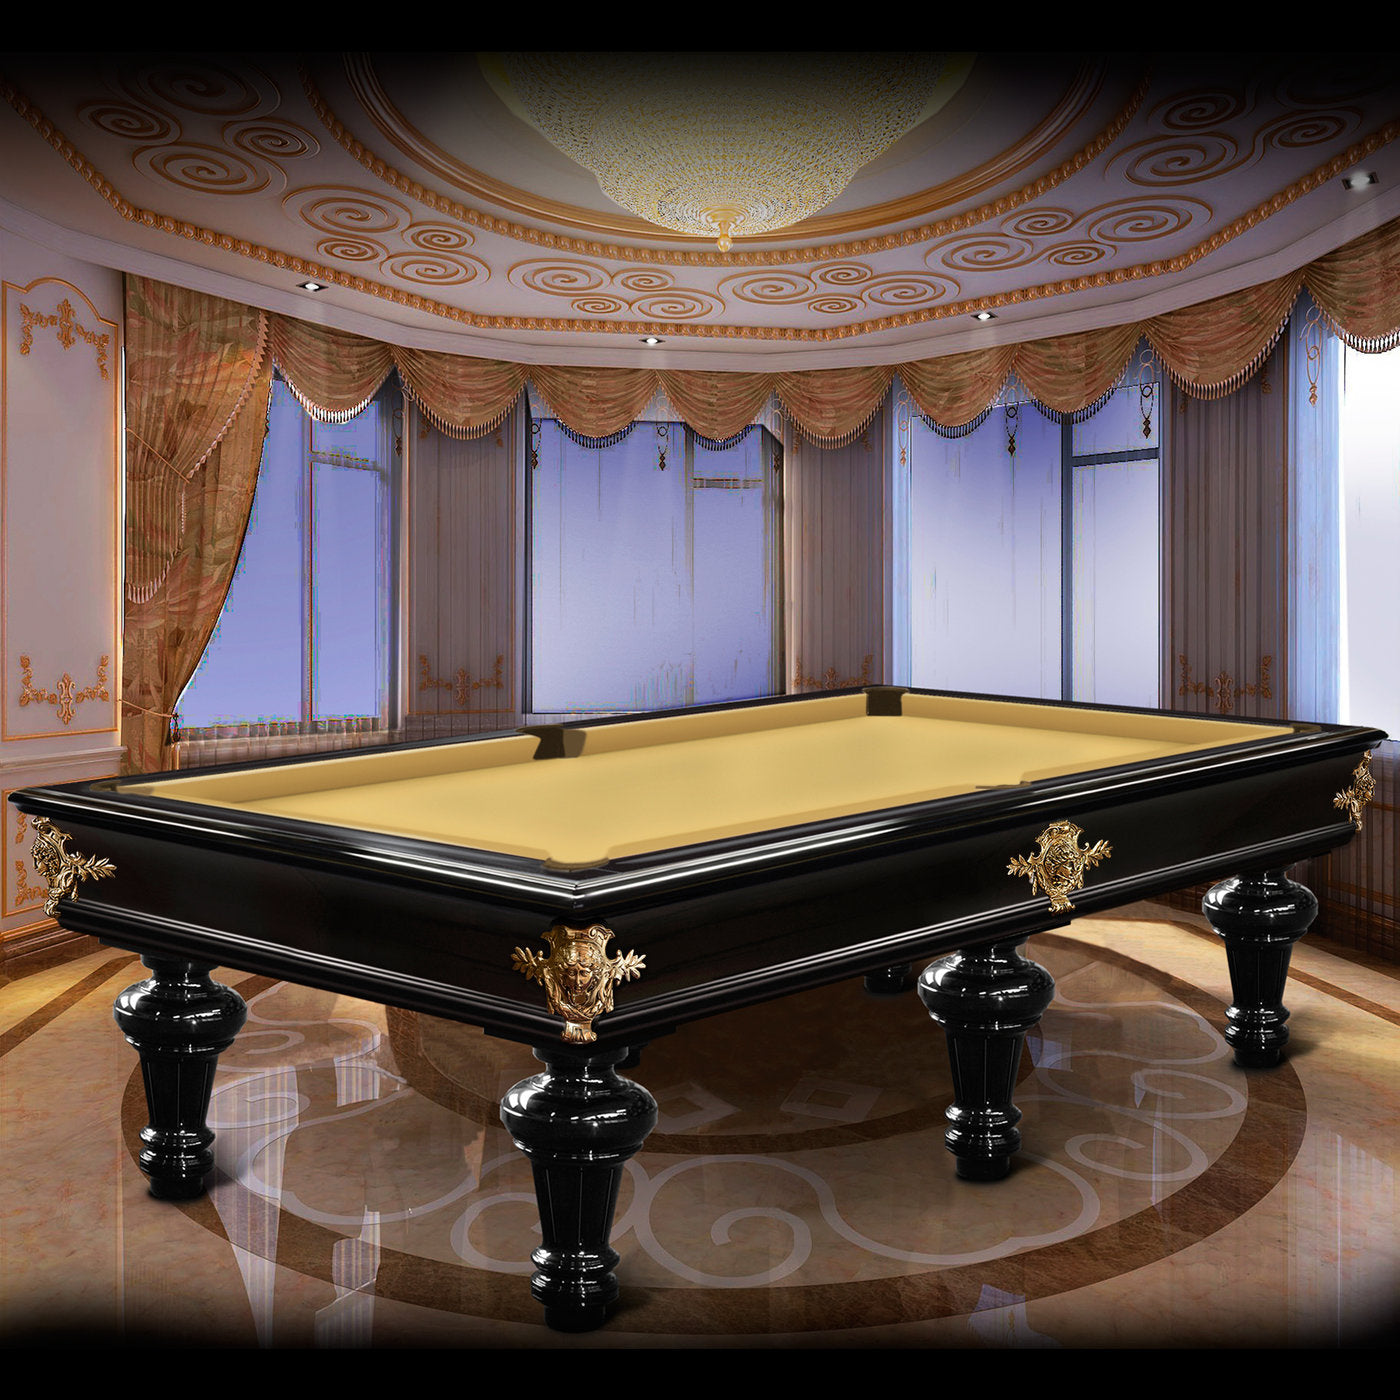 Fashion Black Billiard Pool Table - Alternative view 2